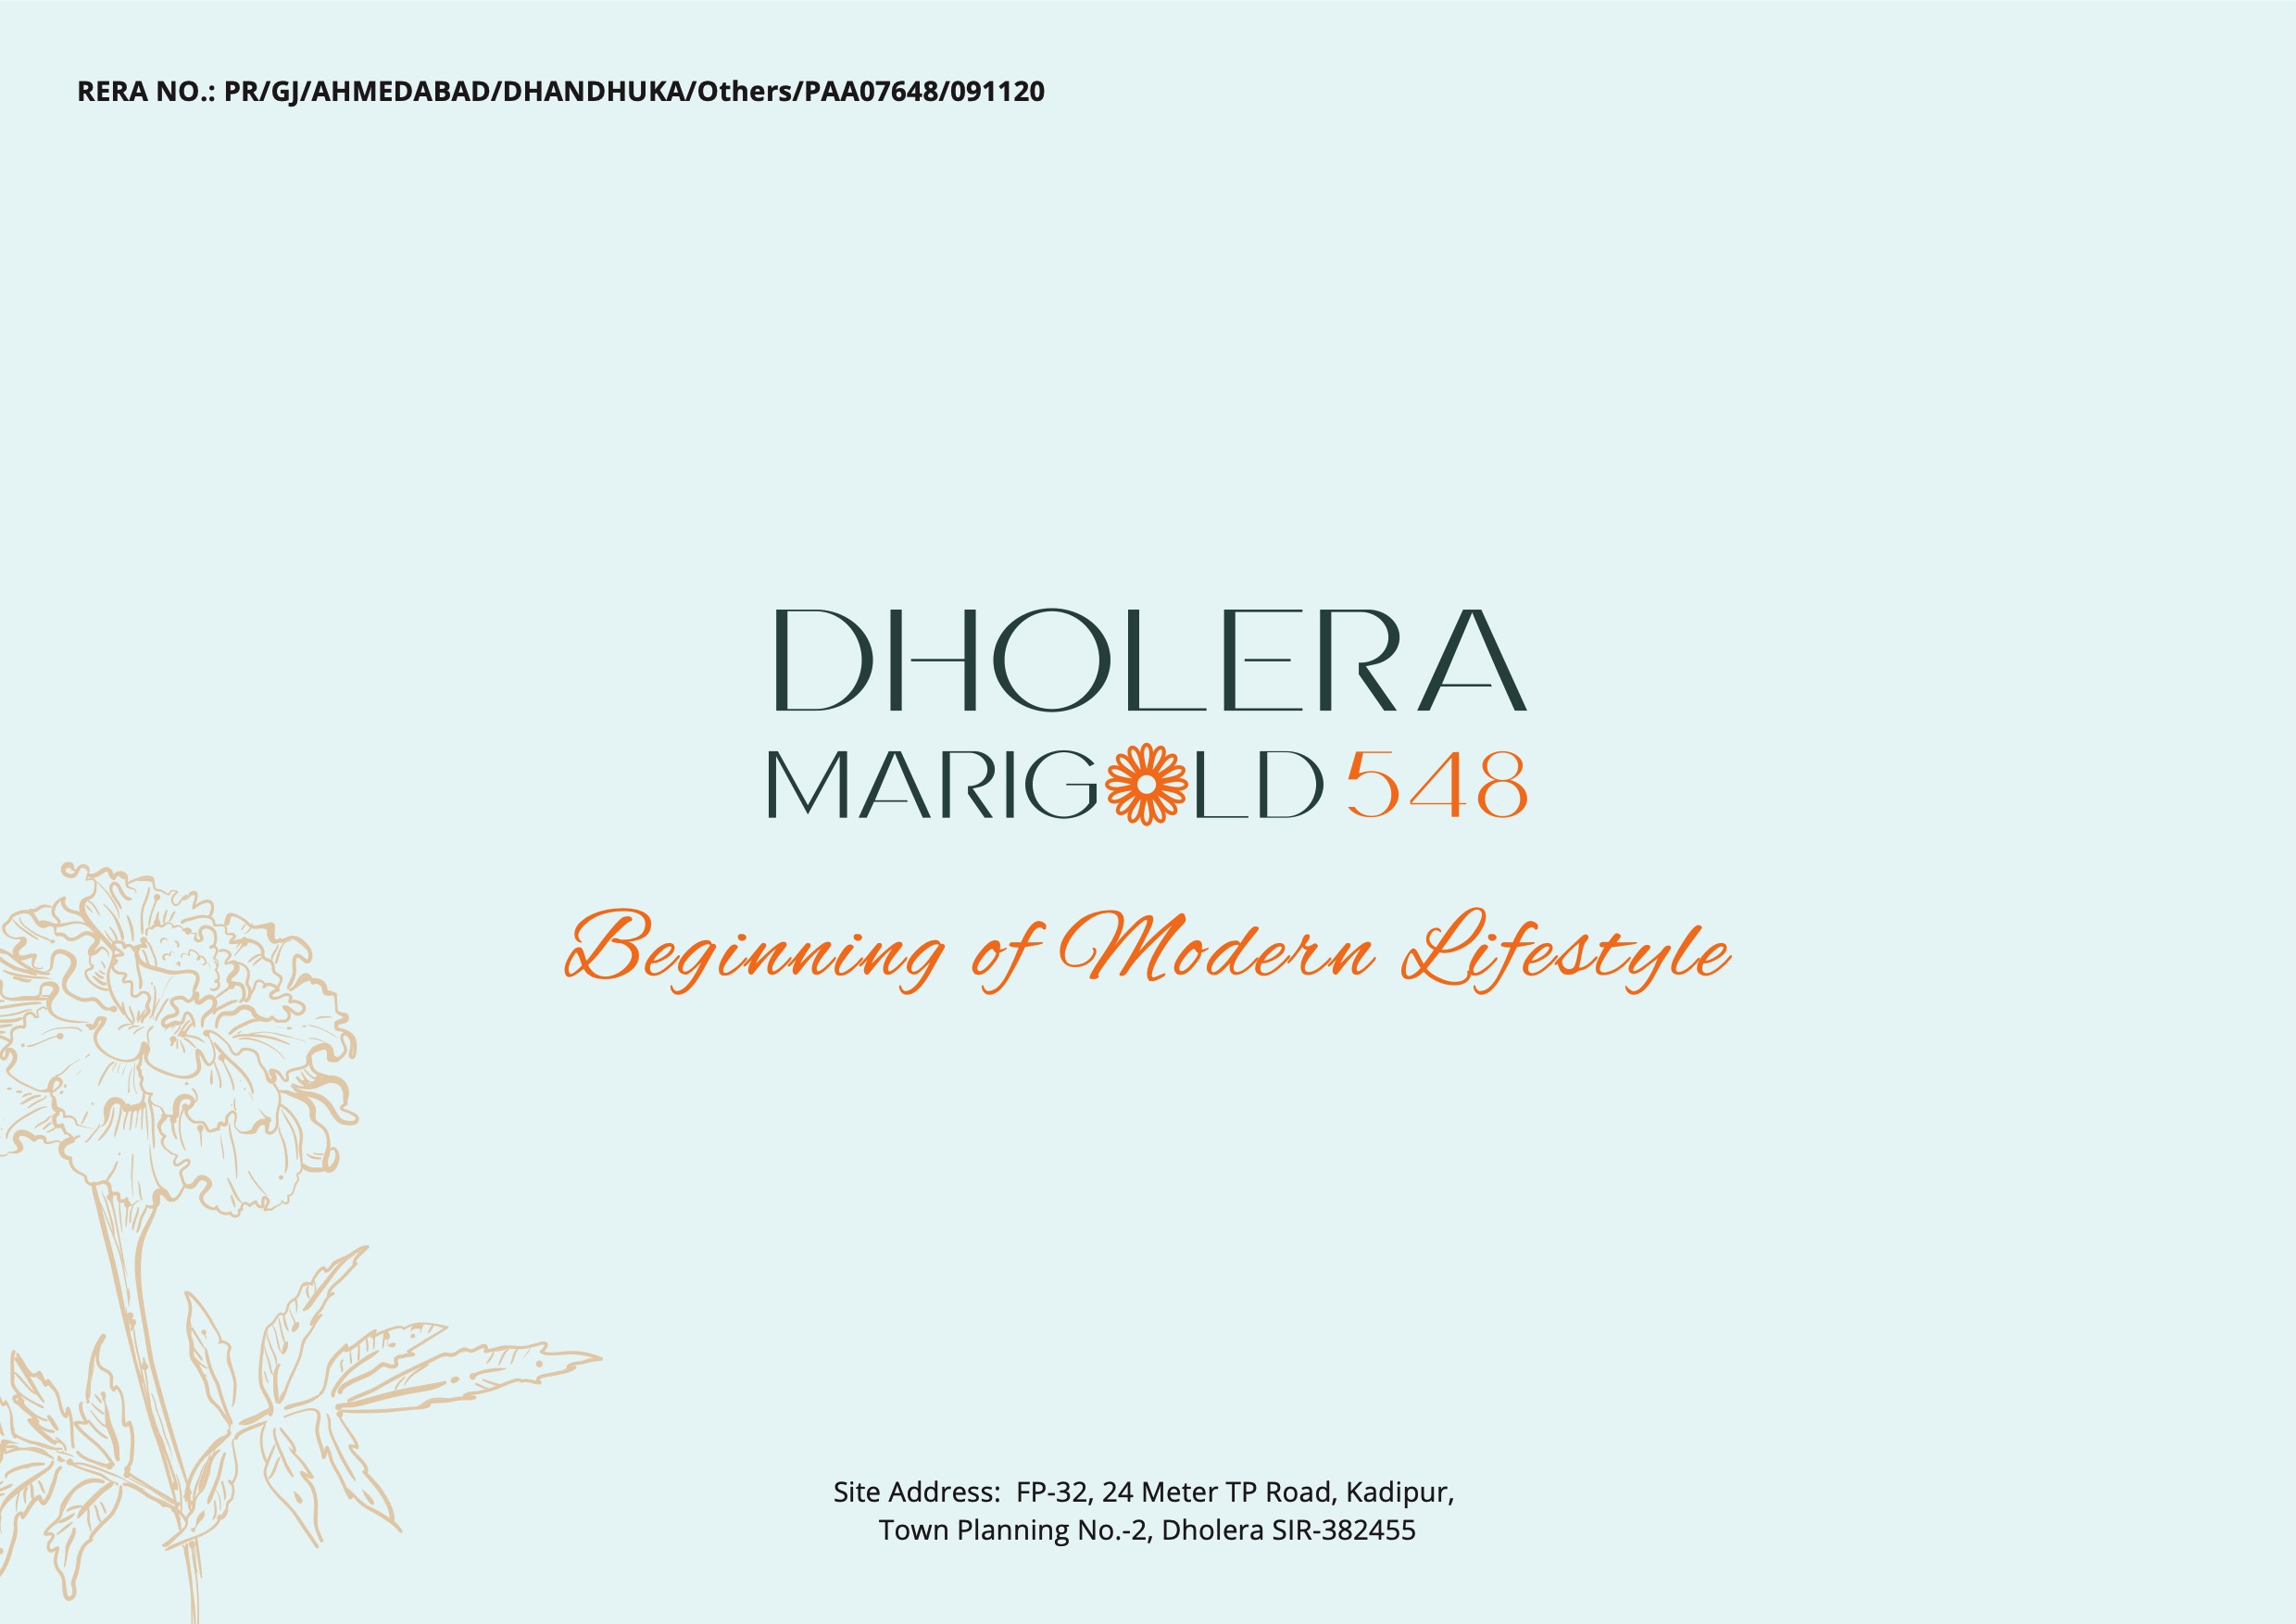 Dholera Marigold 548